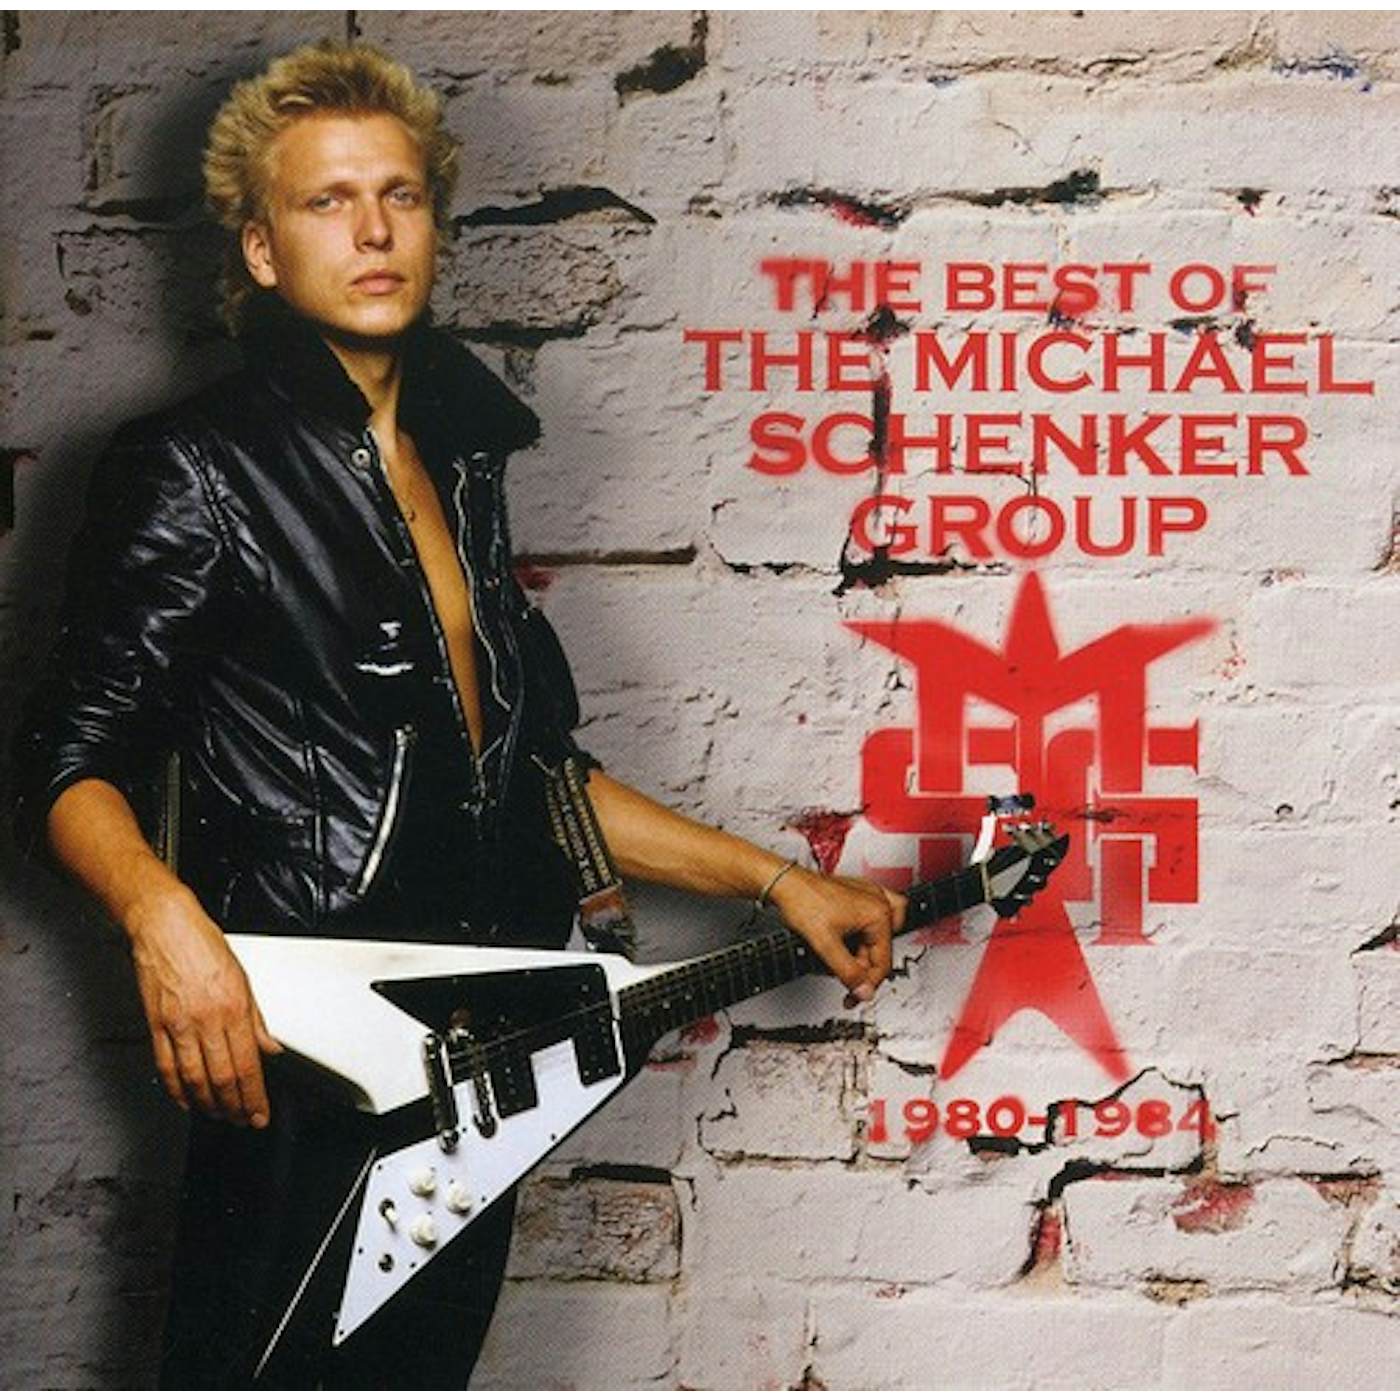 BEST OF THE MICHAEL SCHENKER GROUP (1980-1984) CD